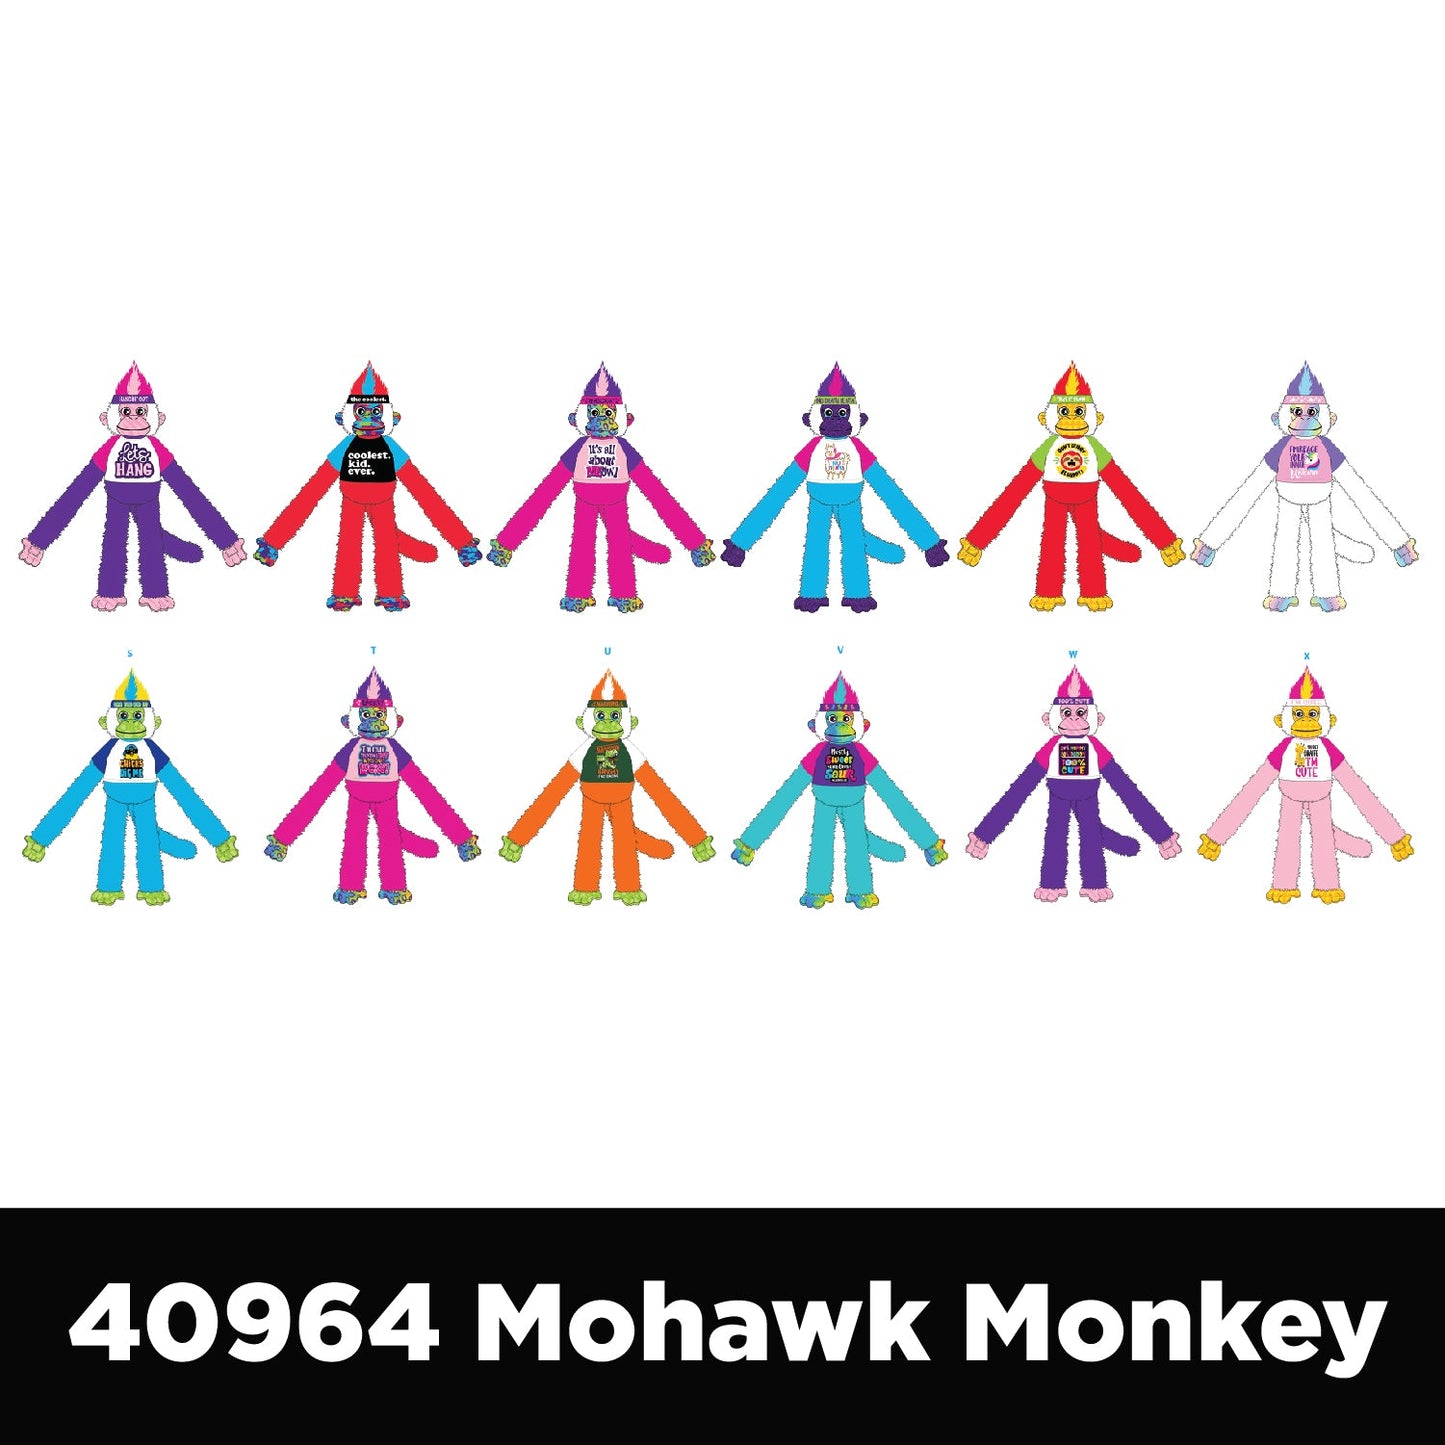 ITEM NUMBER 088437 MOHAWK MONKEY FLOOR DISPLAY 24 PIECES PER DISPLAY